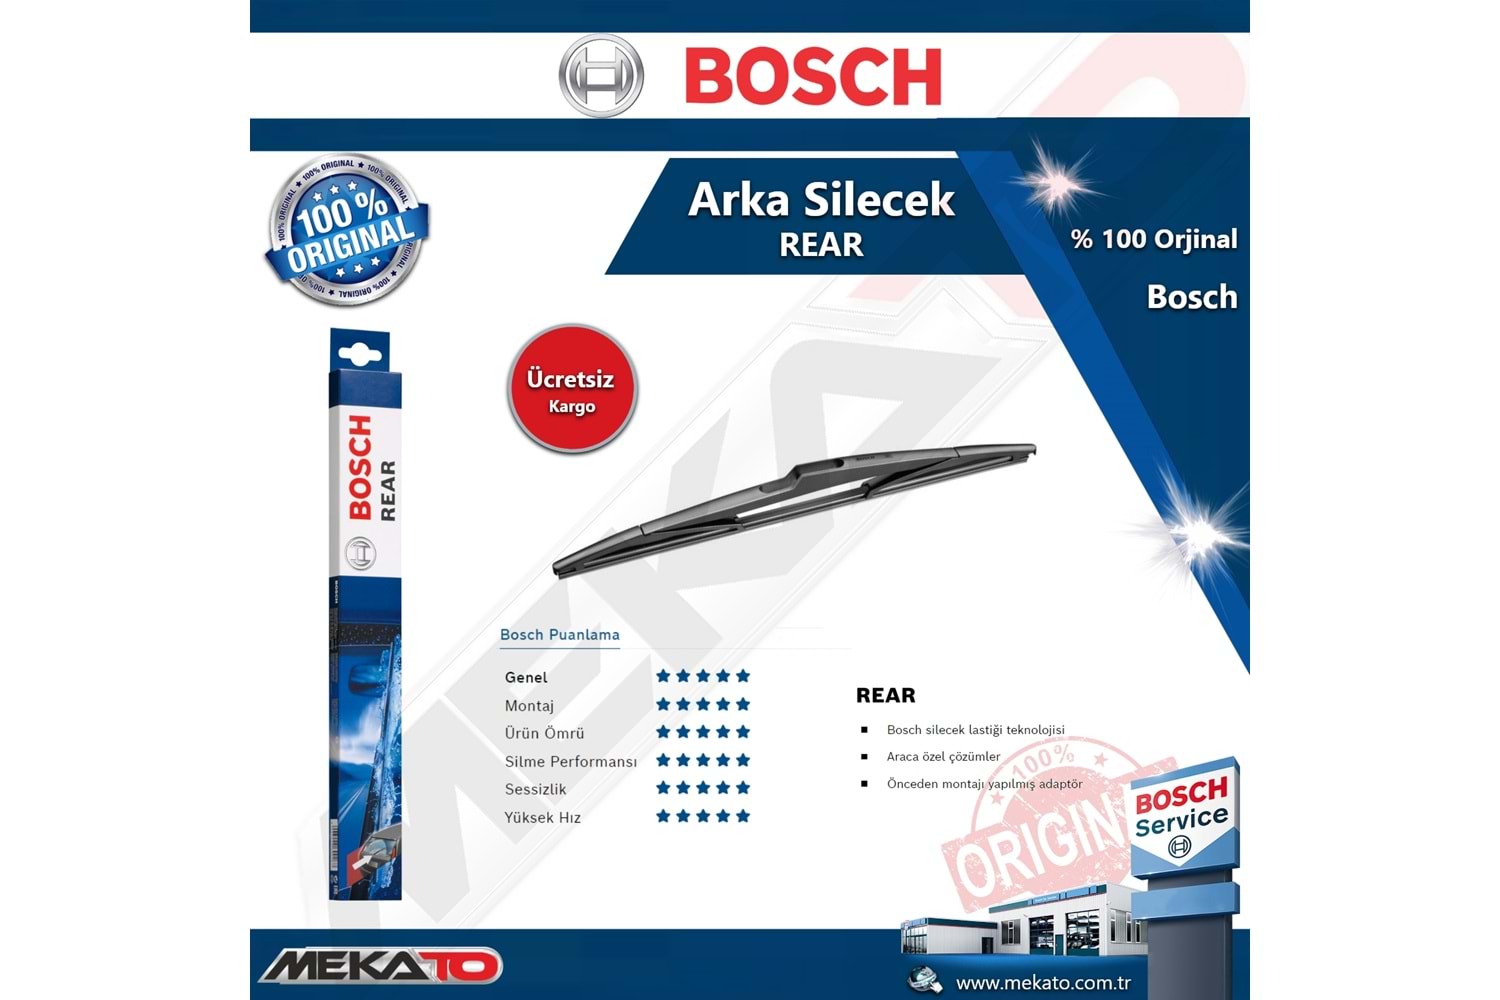 Bmw E83 Arka Silecek Bosch Rear 2004-2010